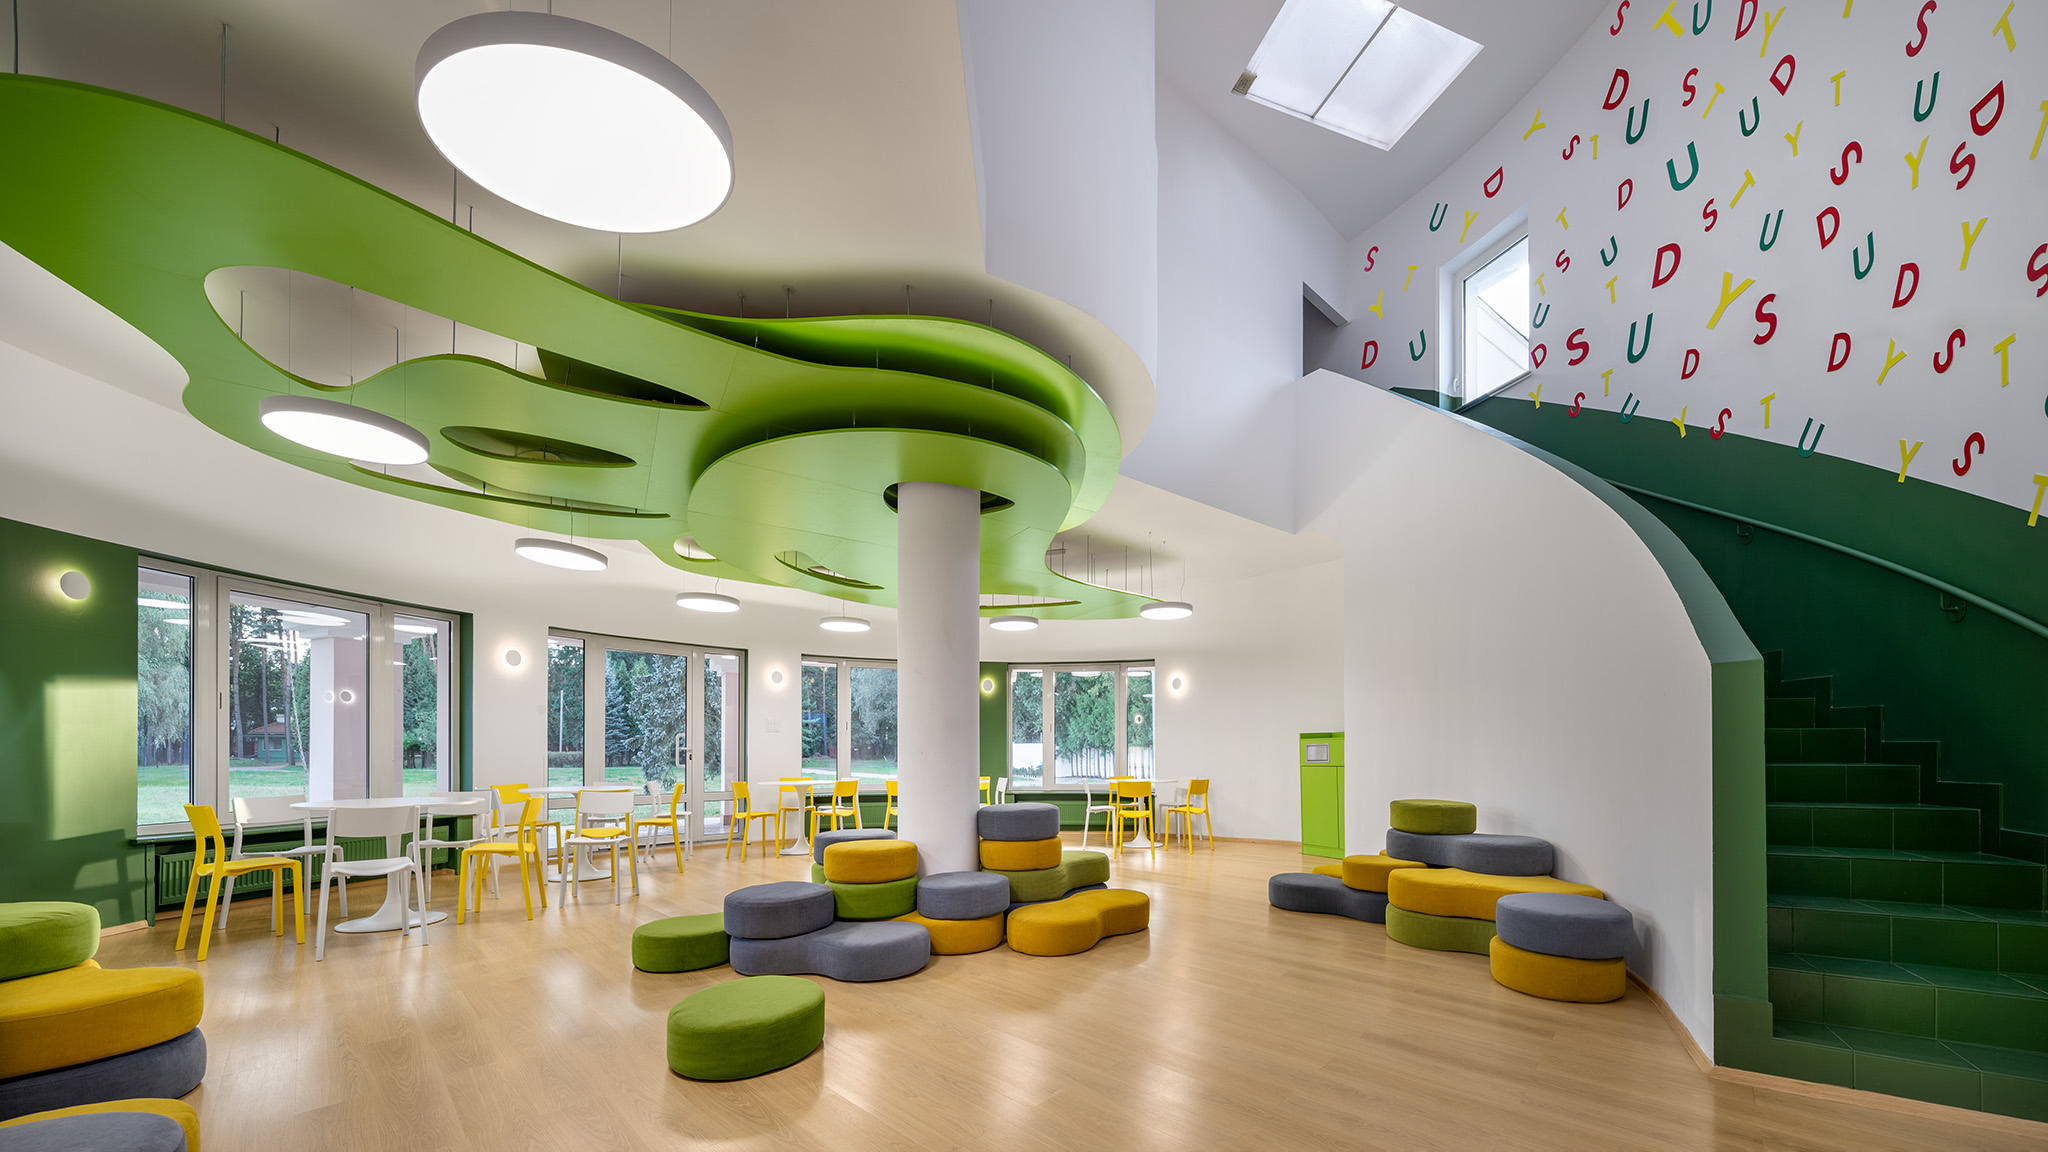 Interior Design of a Modern School 3